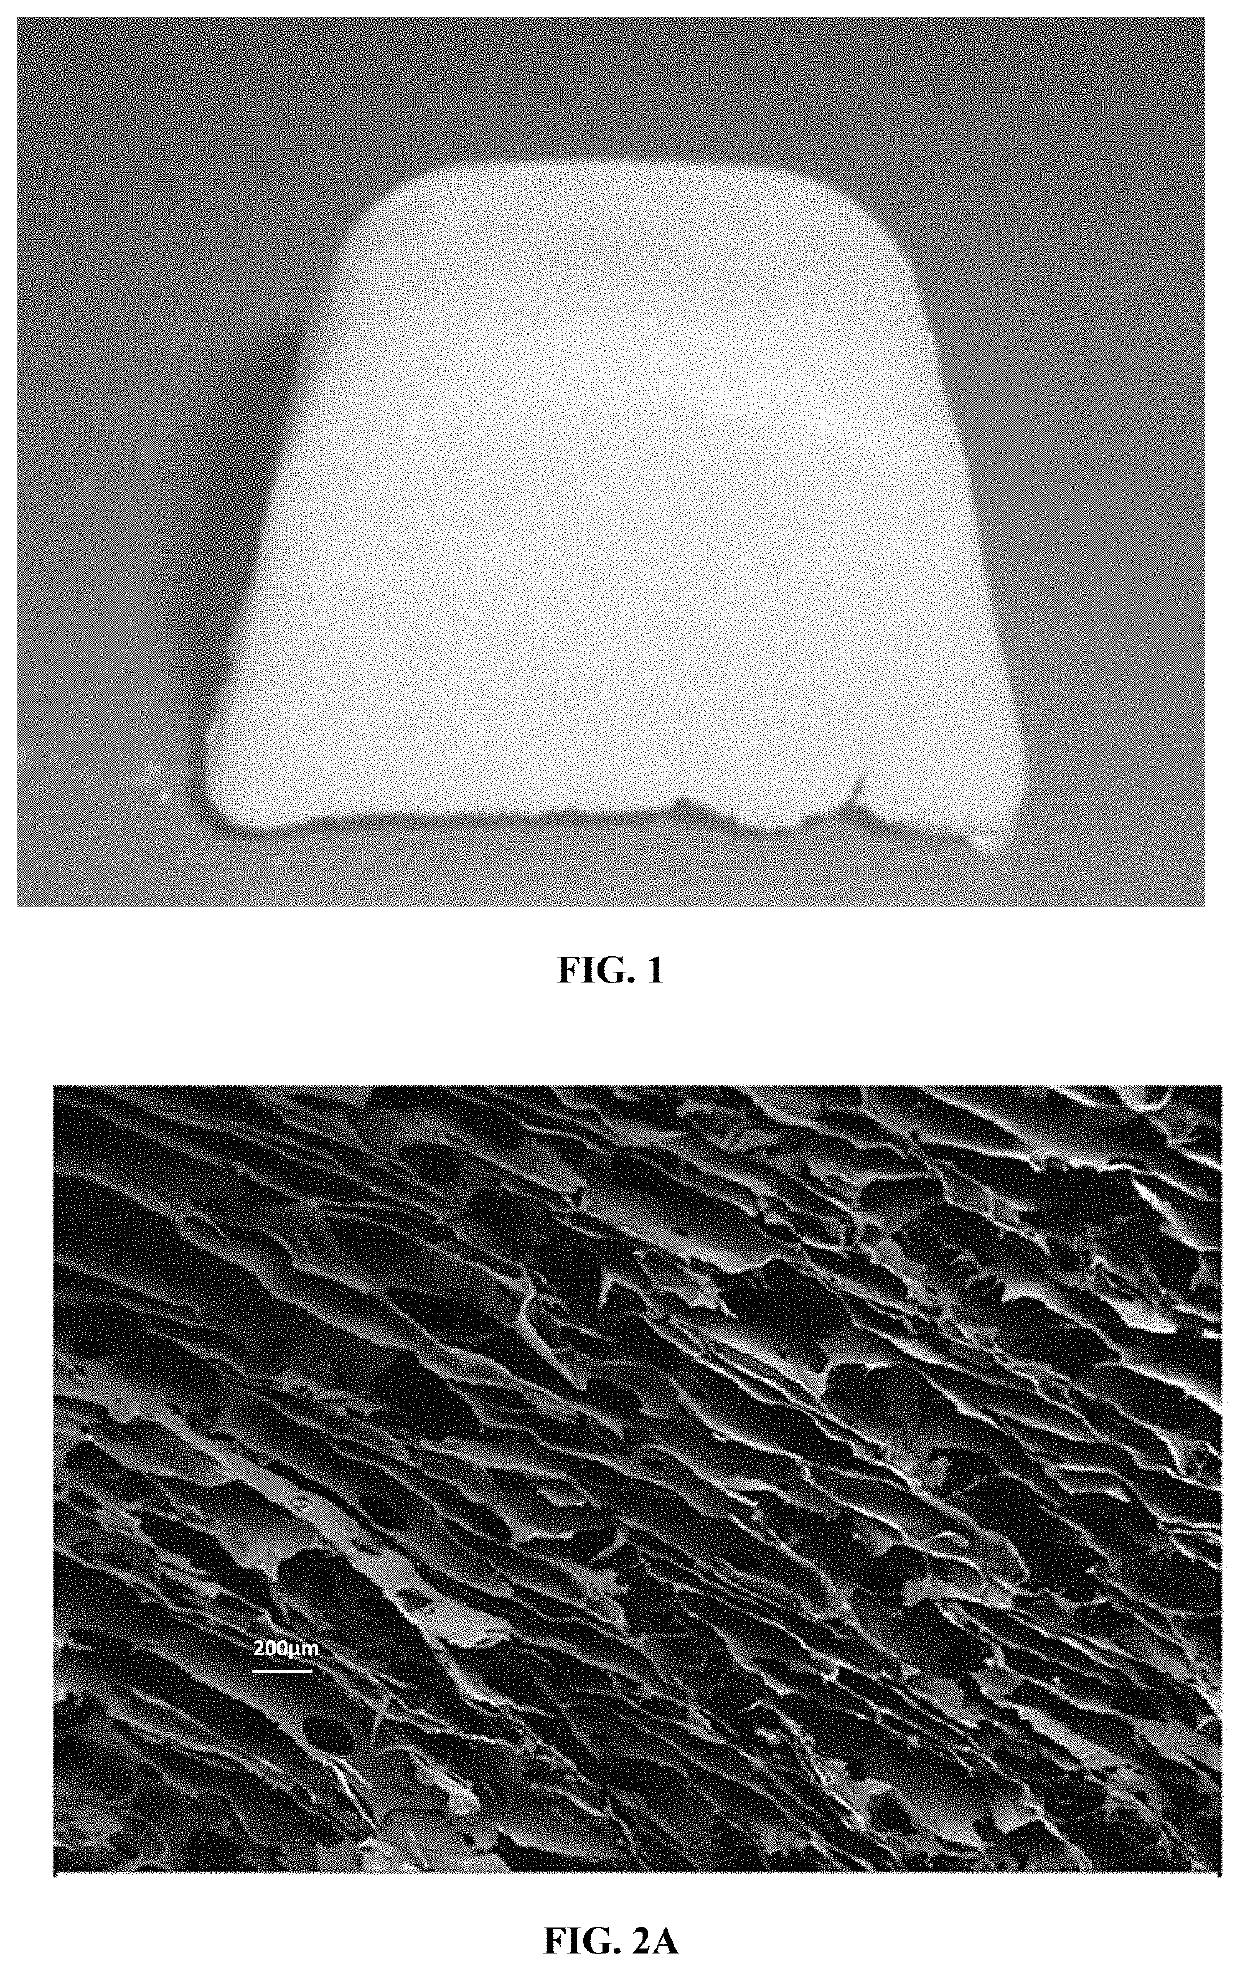 Connective tissues, such as bone, dentin or pulp, regenerative material comprising calcium silicate